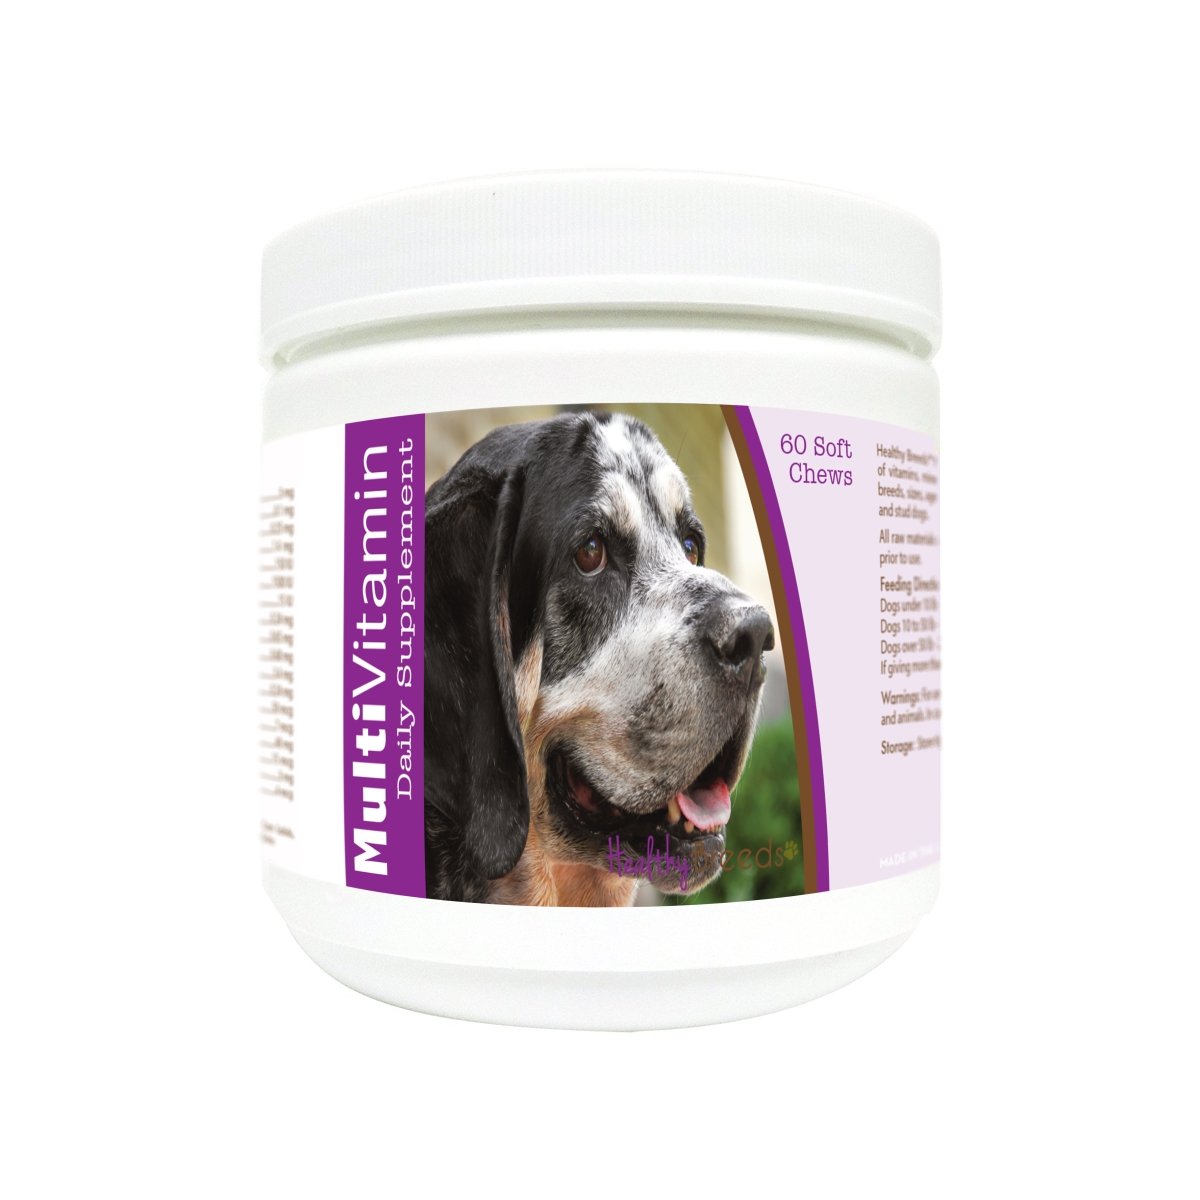 840235178903 Bluetick Coonhound Multi-vitamin Soft Chews - 60 Count